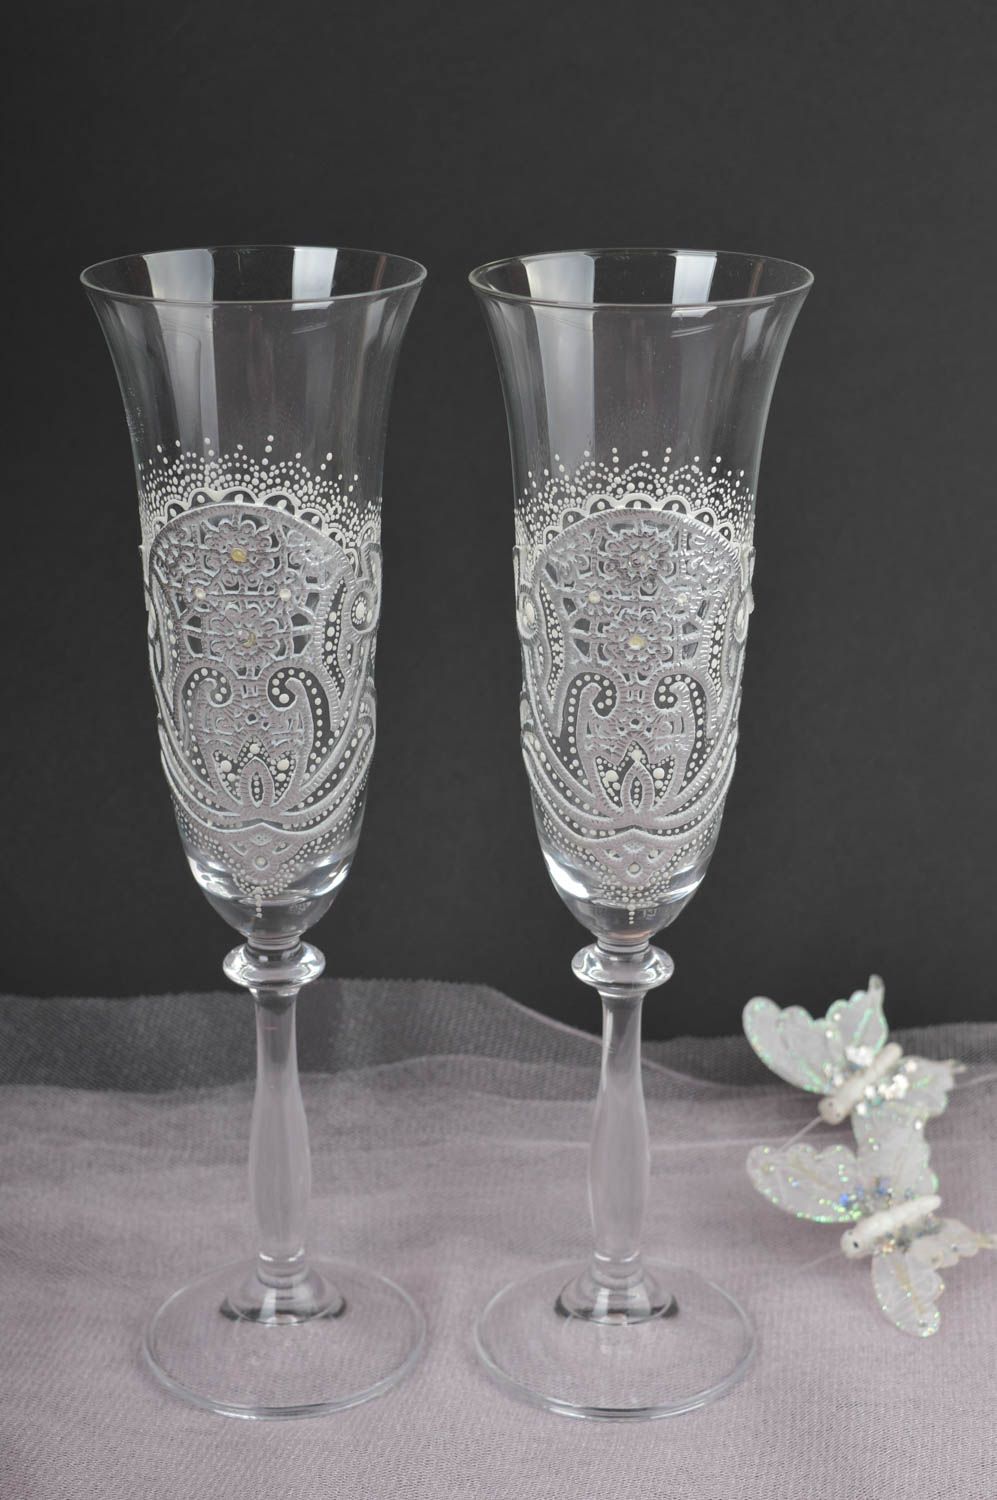 Handmade glasses for wedding glasses for newlyweds wedding attributes photo 1